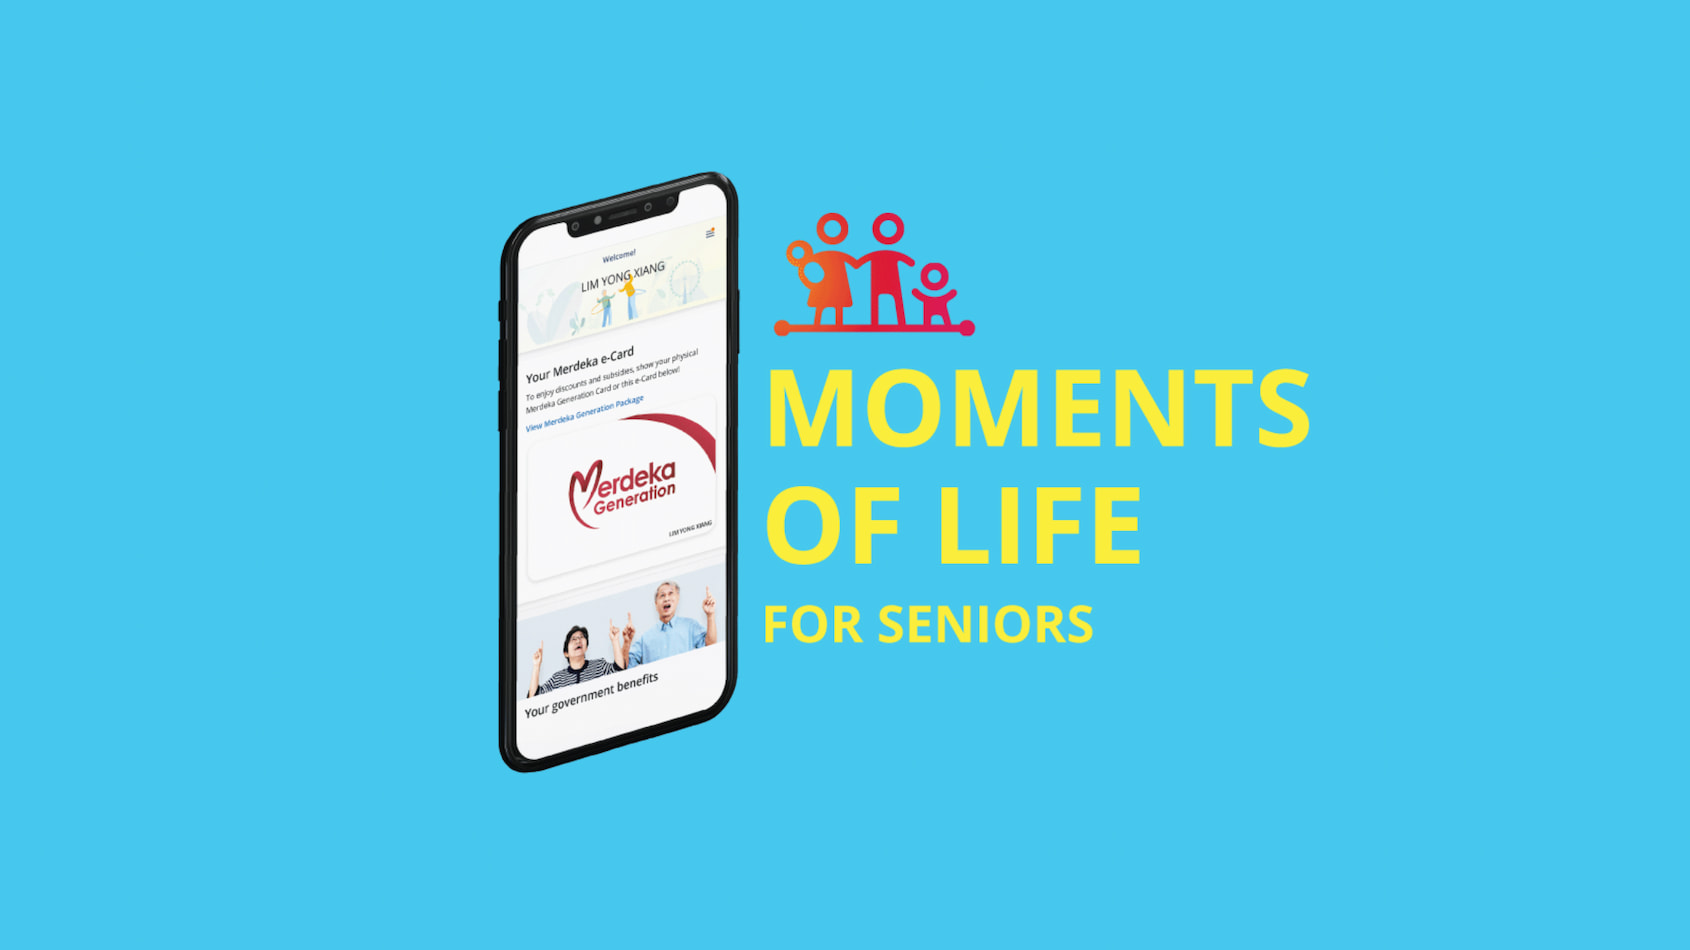 Enhanced Moments of Life app for Merdeka Generation